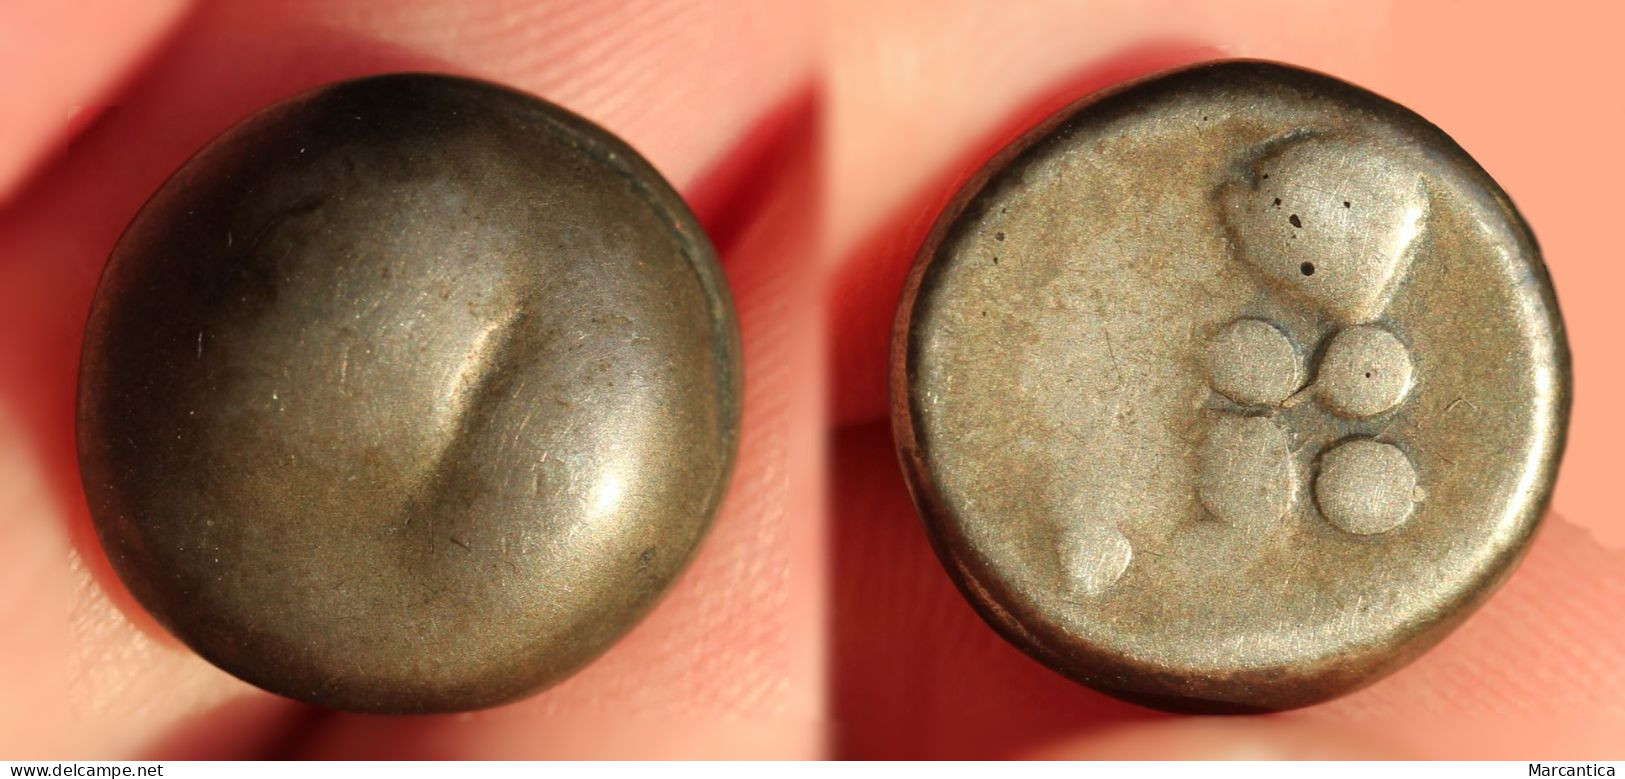 CELTIC , Danube ,Cotini - Type De Buckelavers- Danubian Celts ,silver Tetradrachm,19mm, 3rd-2nd Century BC - Galle